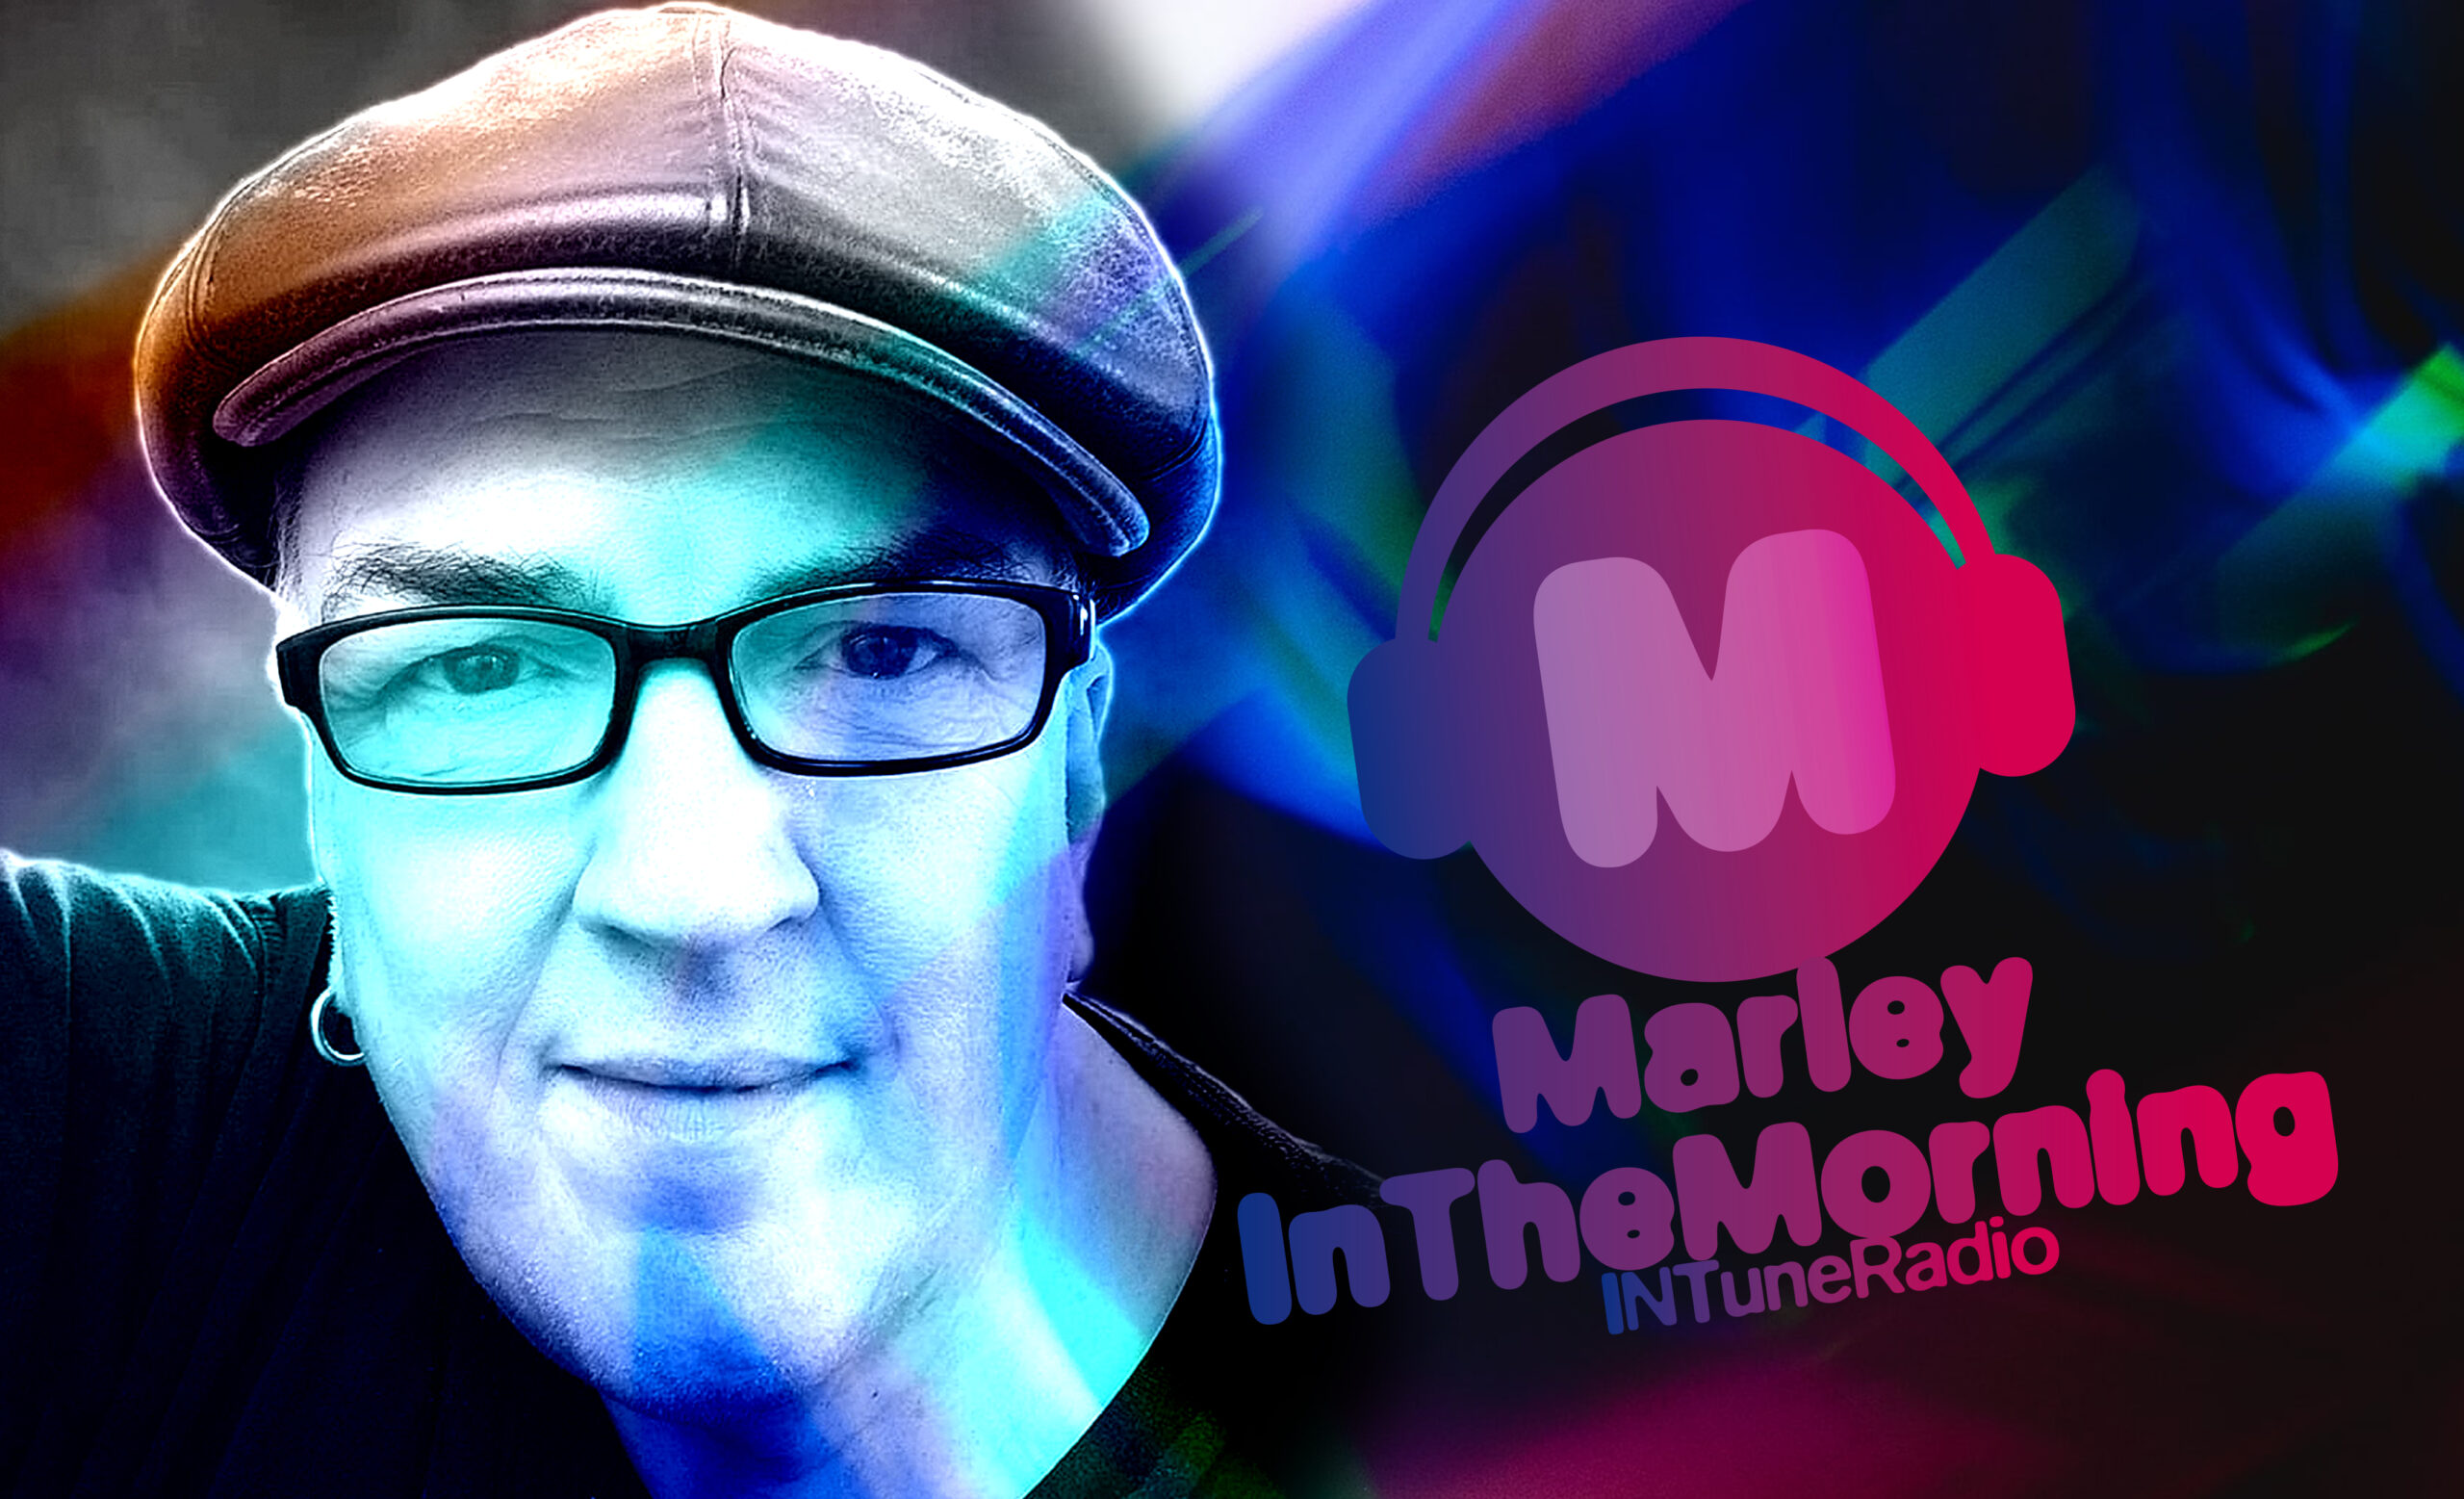 Dave Marley on INTune Radio